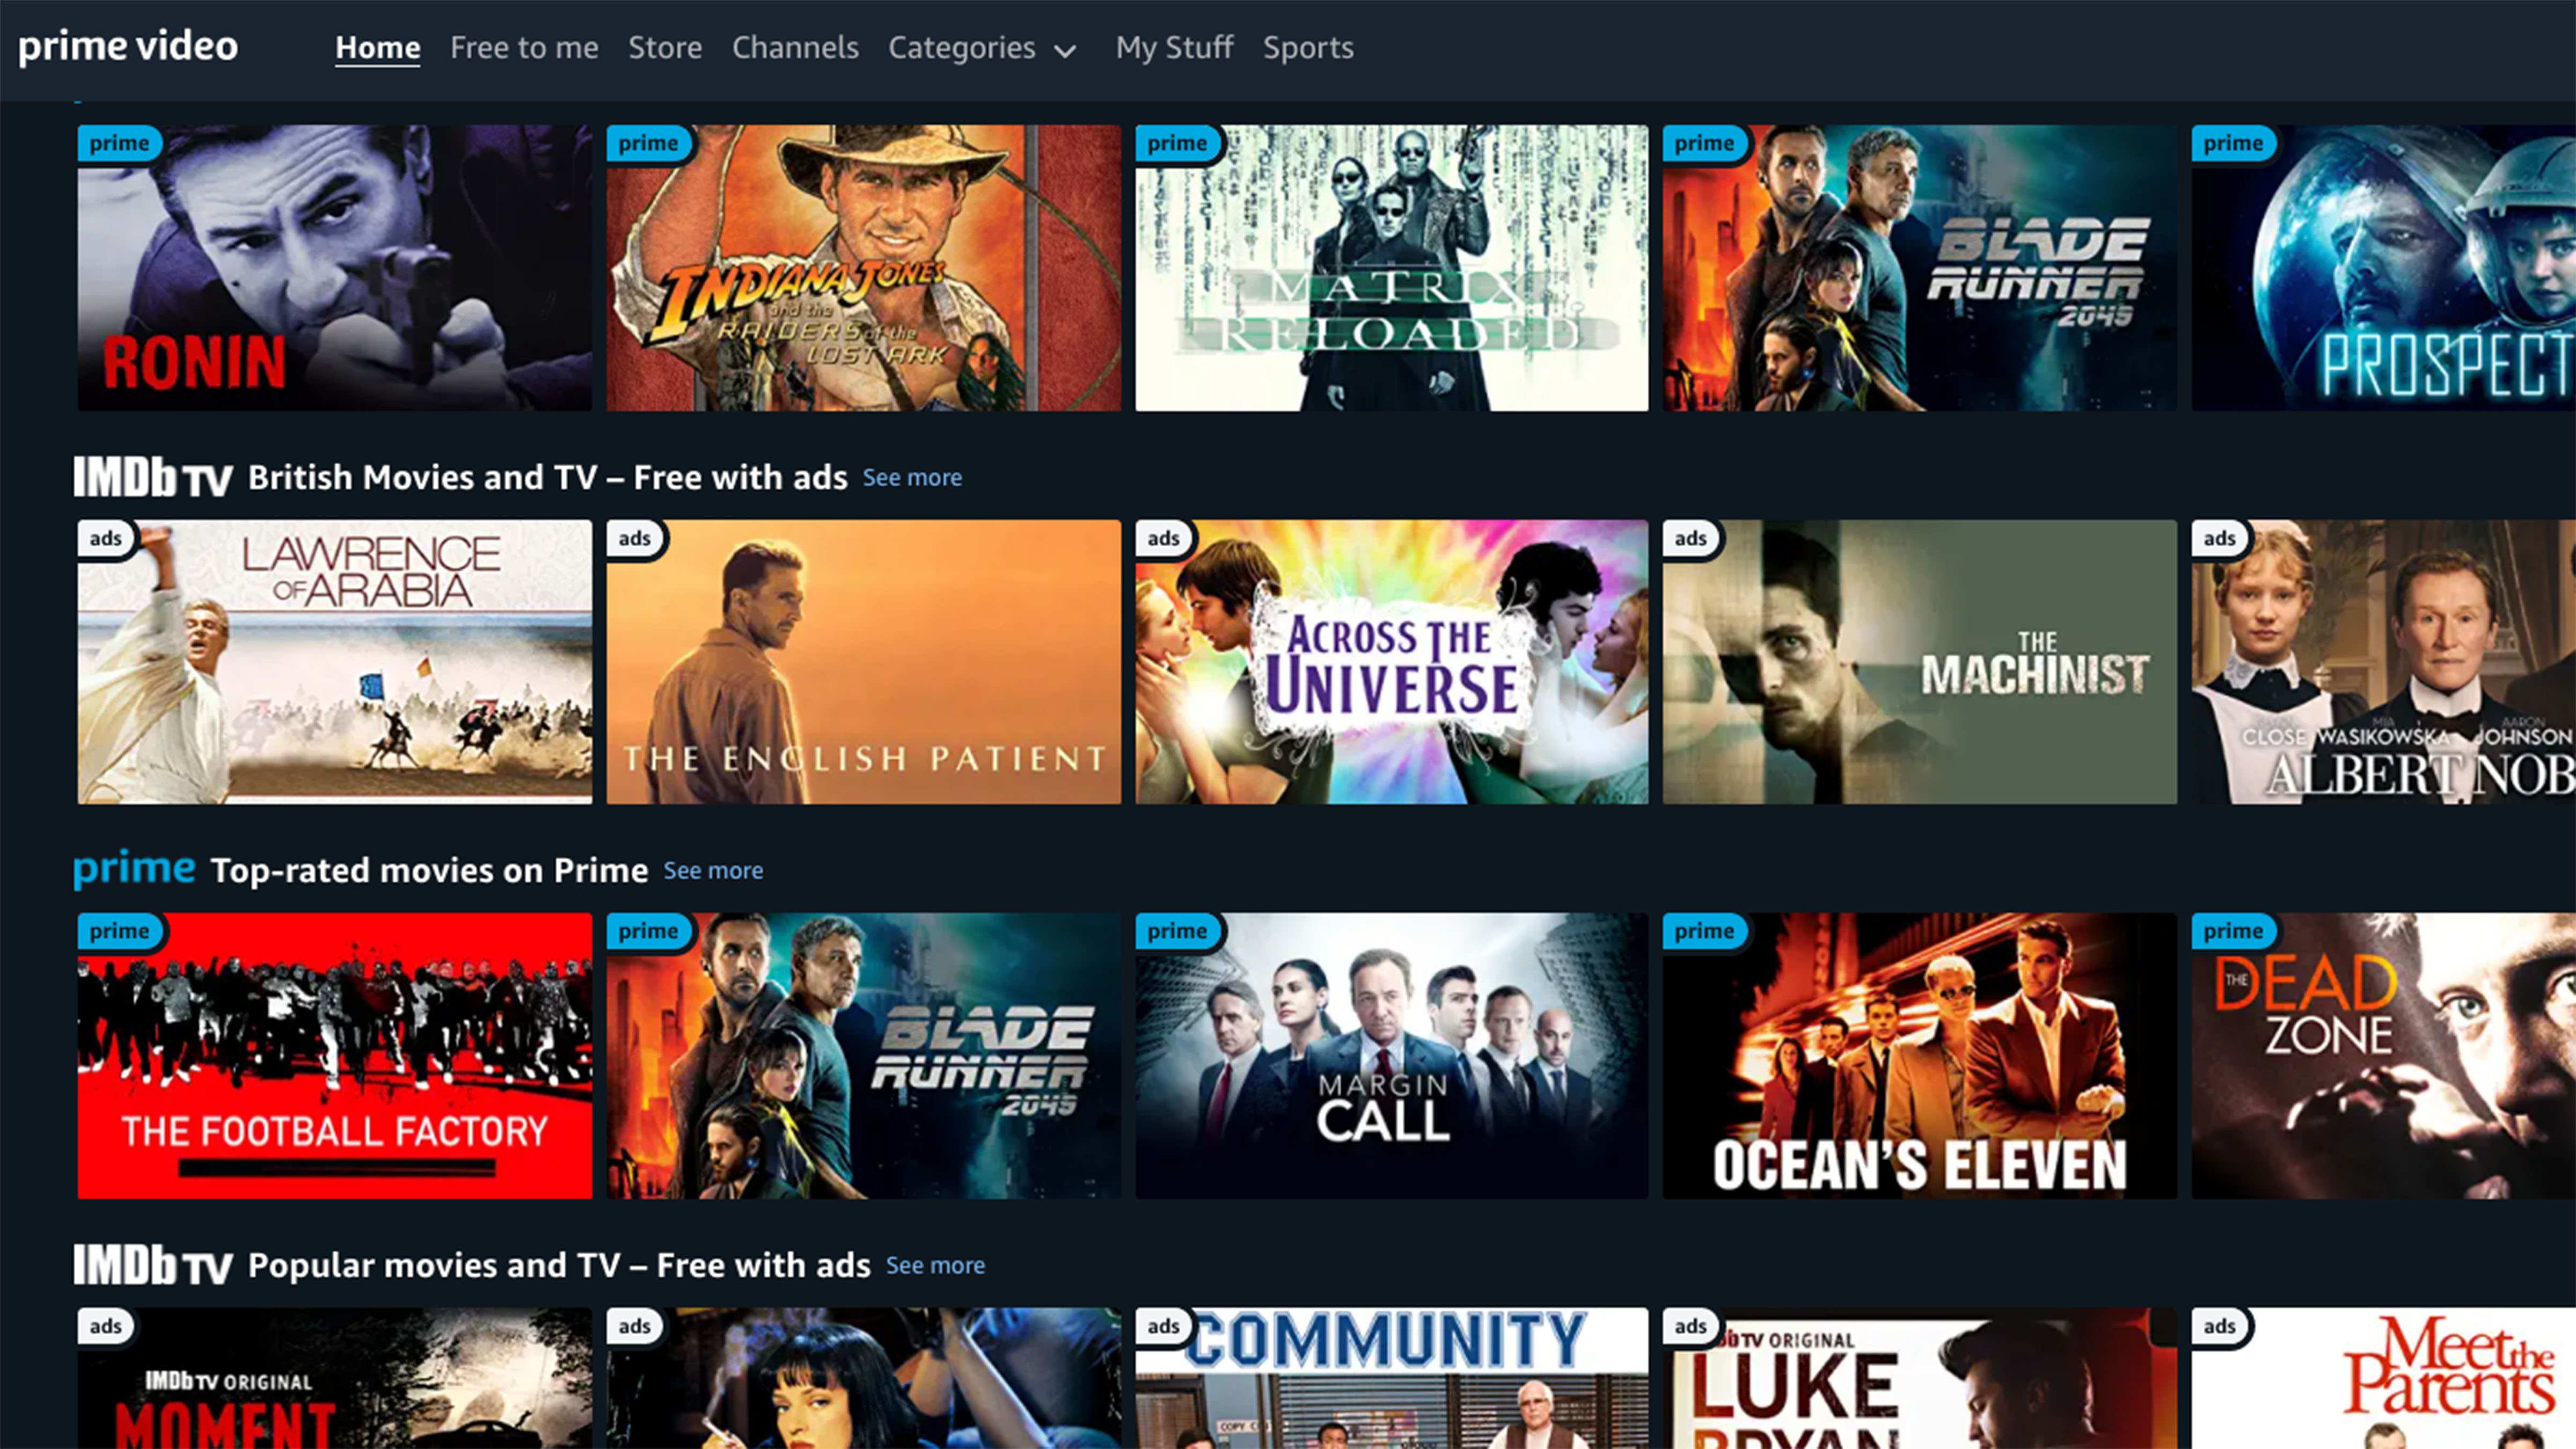 A screengrab of the IMDb TV row on Amazon Prime Video.